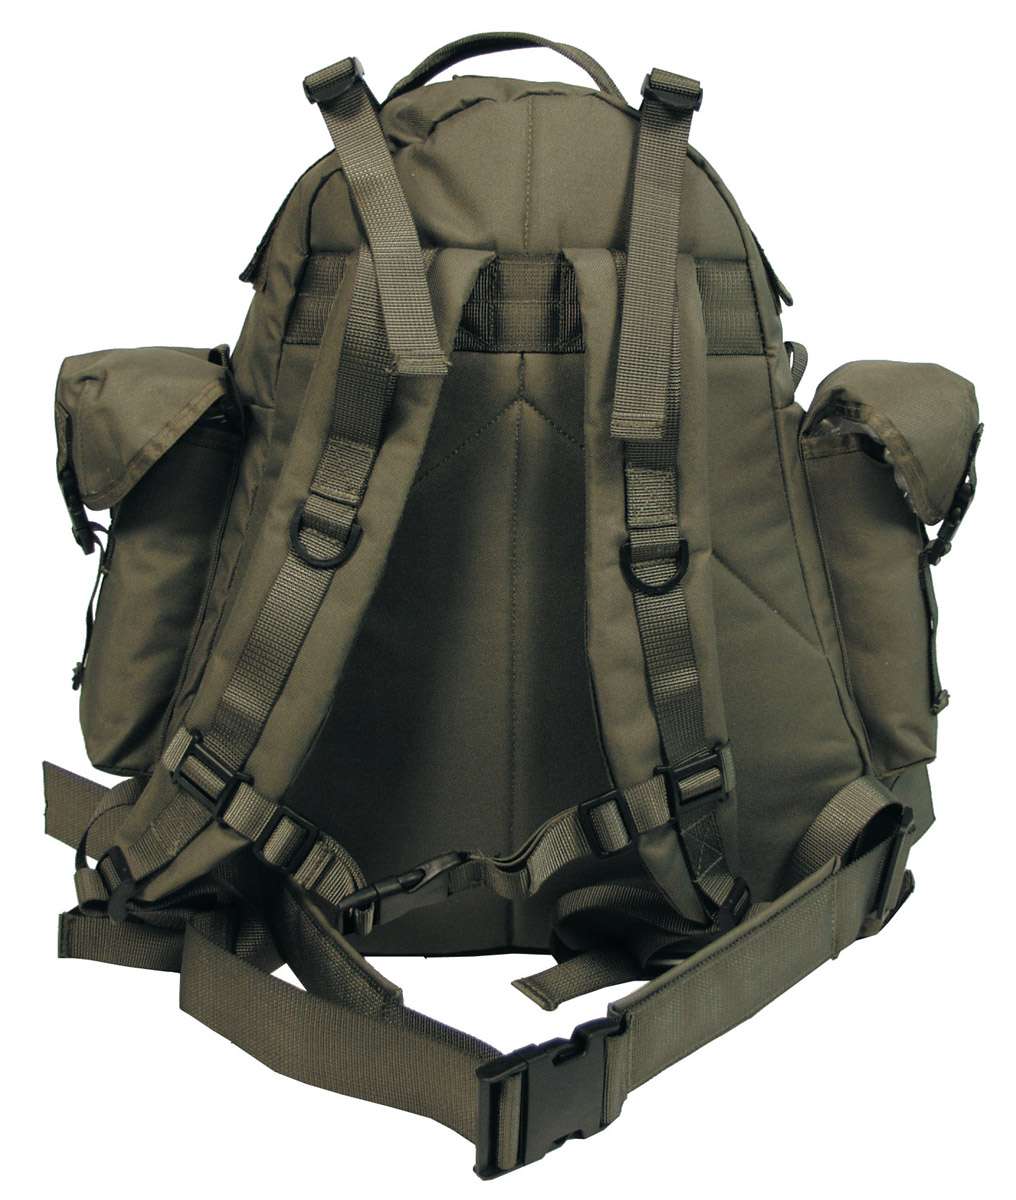 Портфель 40. Рюкзак Tactical MFH,. MFH (Max Fuchs) рюкзак Daypack 15l. Рюкзак Combo олива. Рюкзак ares 40 литров олива.